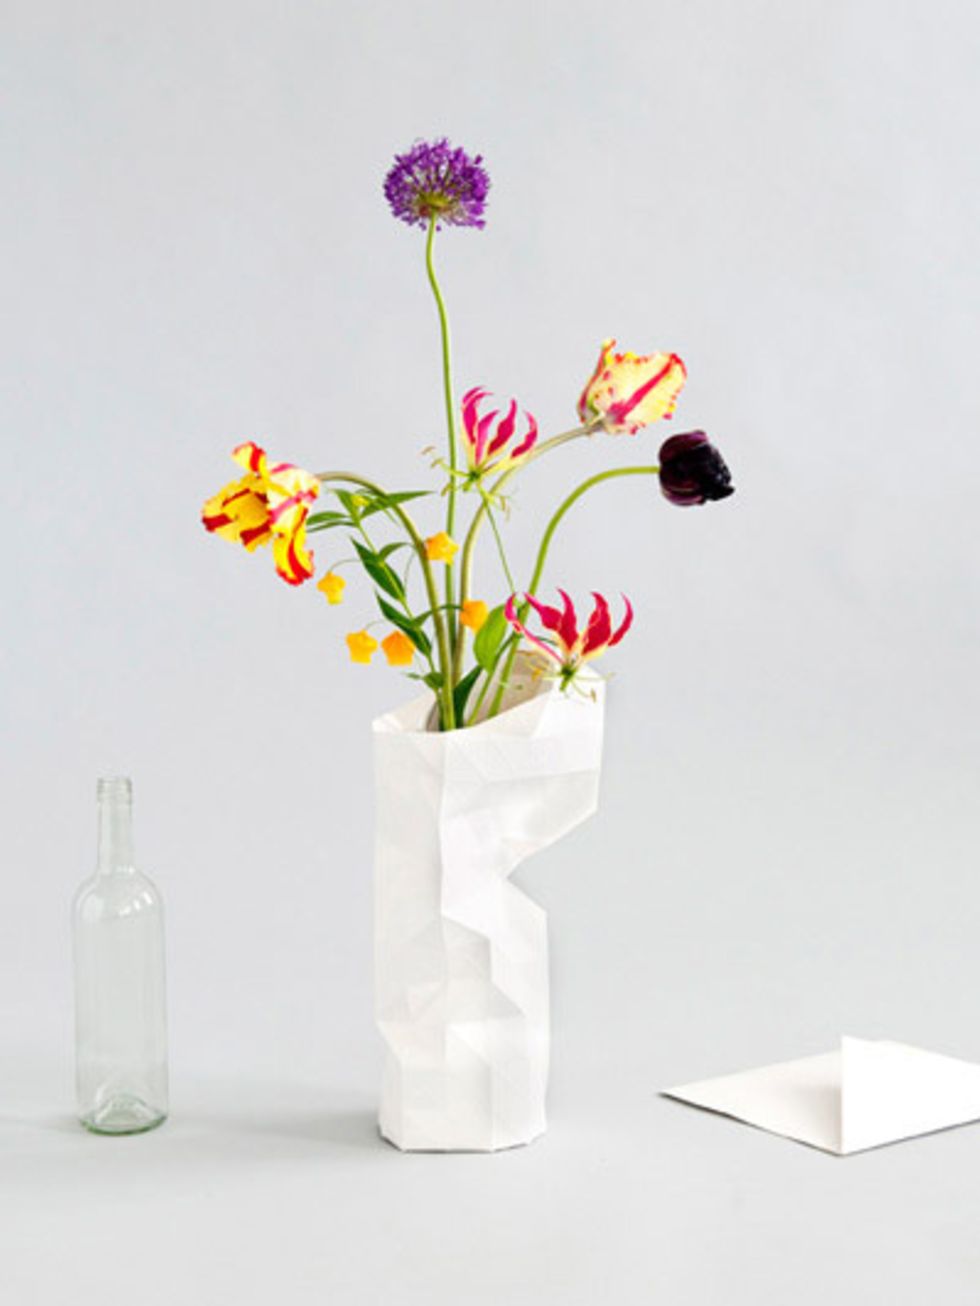 Petal, Flower, Cut flowers, Artifact, Flowering plant, Vase, Drinkware, Flower Arranging, Plant stem, Still life photography, 